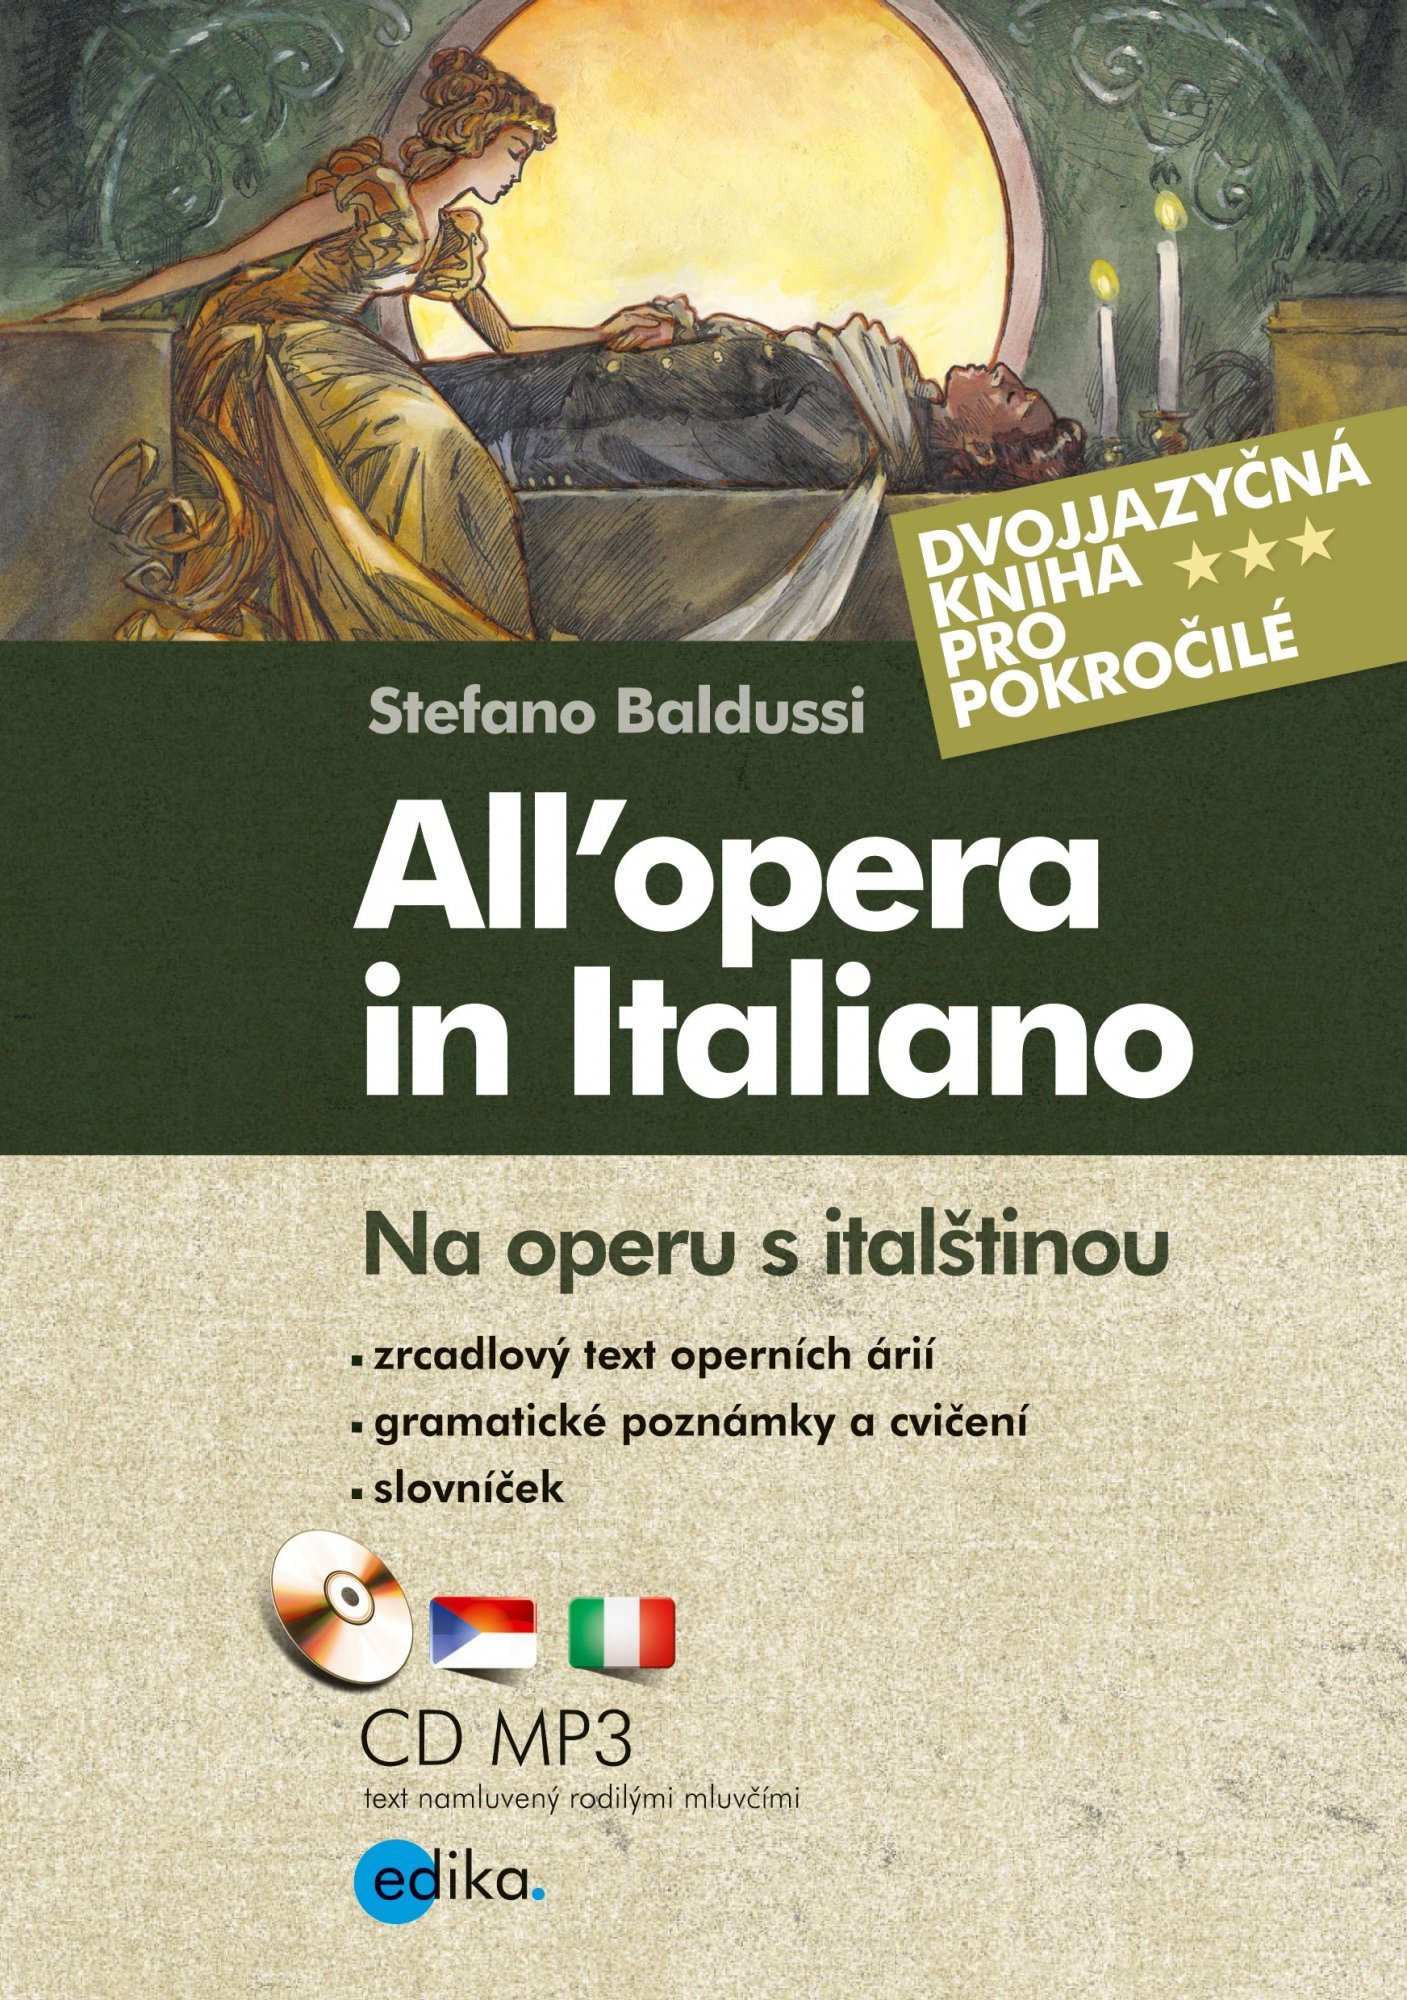 Na operu s italštinou. All’opera in Italiano - Stefano Baldussi